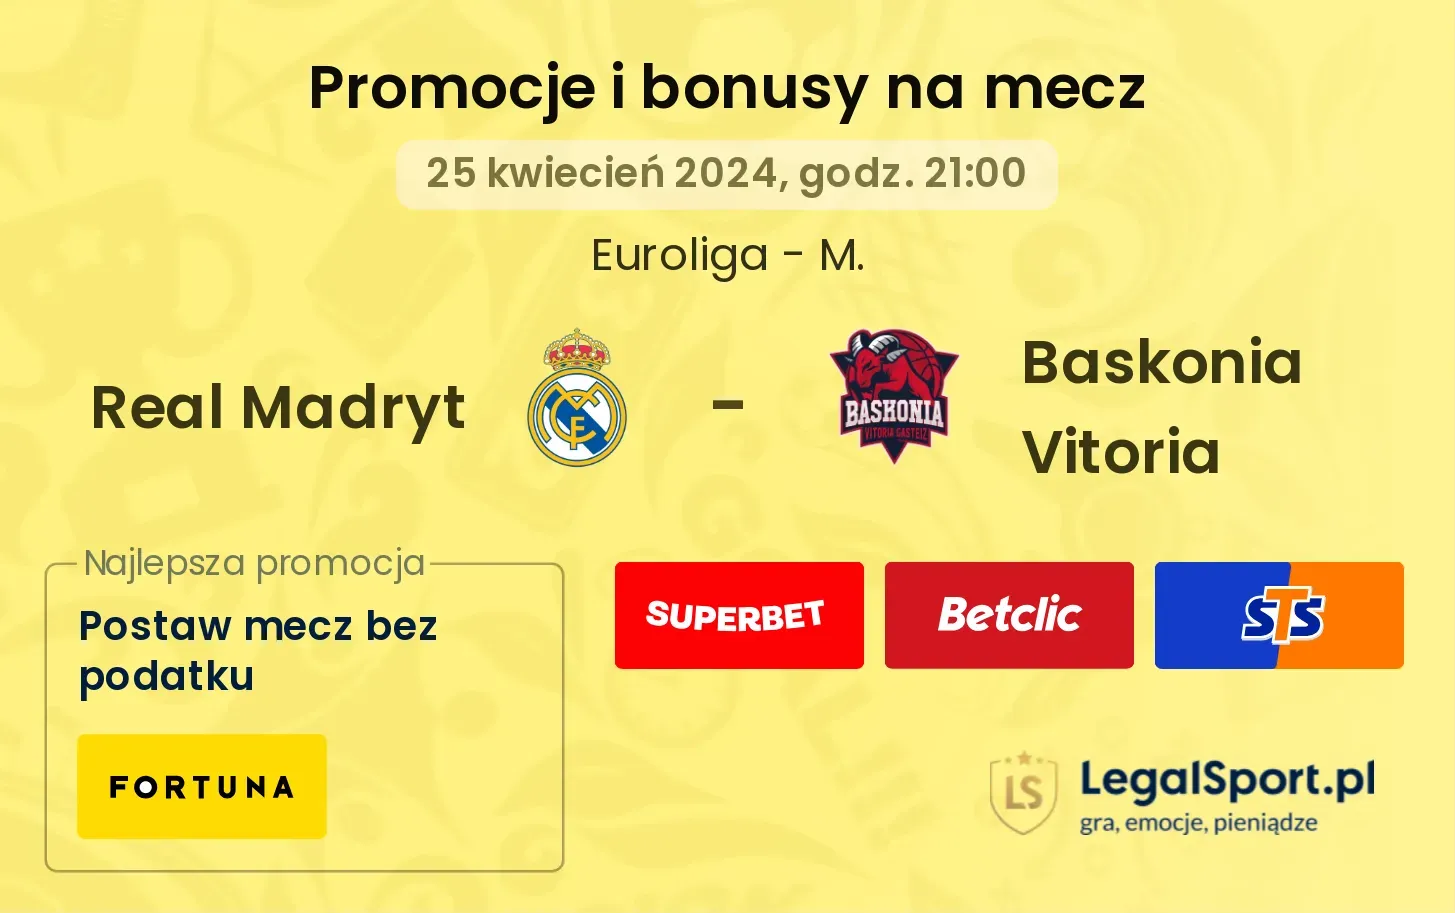 Real Madryt - Baskonia Vitoria promocje i bonusy (25.04, 21:00)